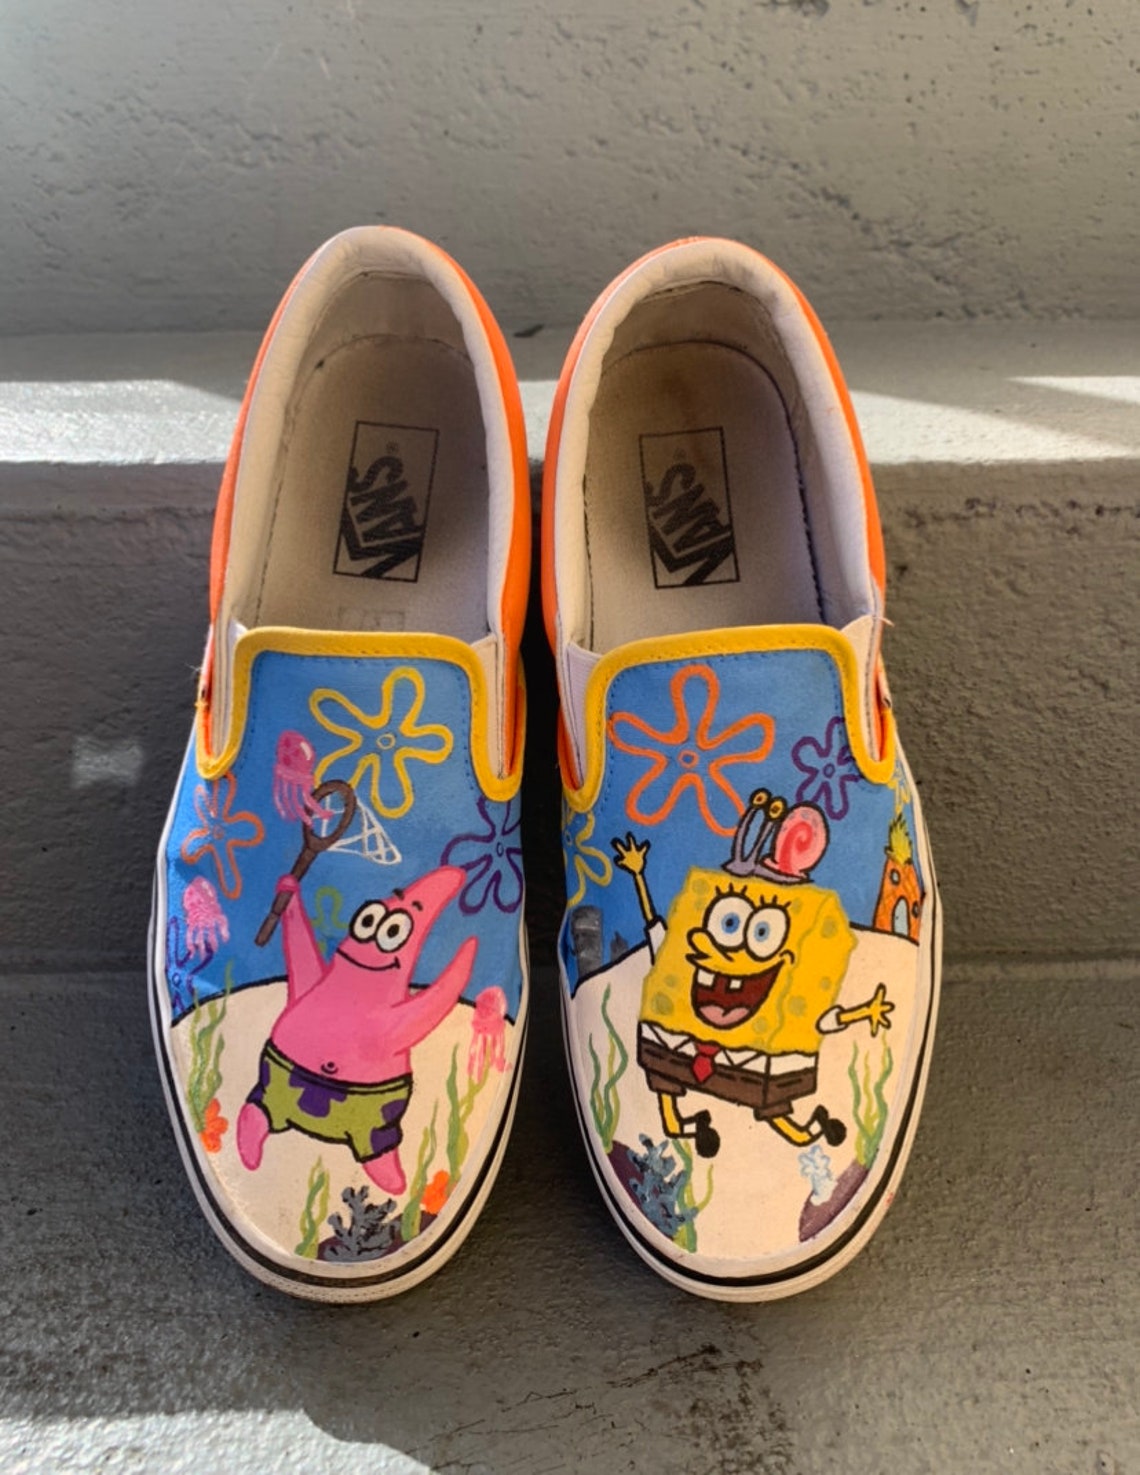 SpongeBob SquarePants custom shoes | Etsy